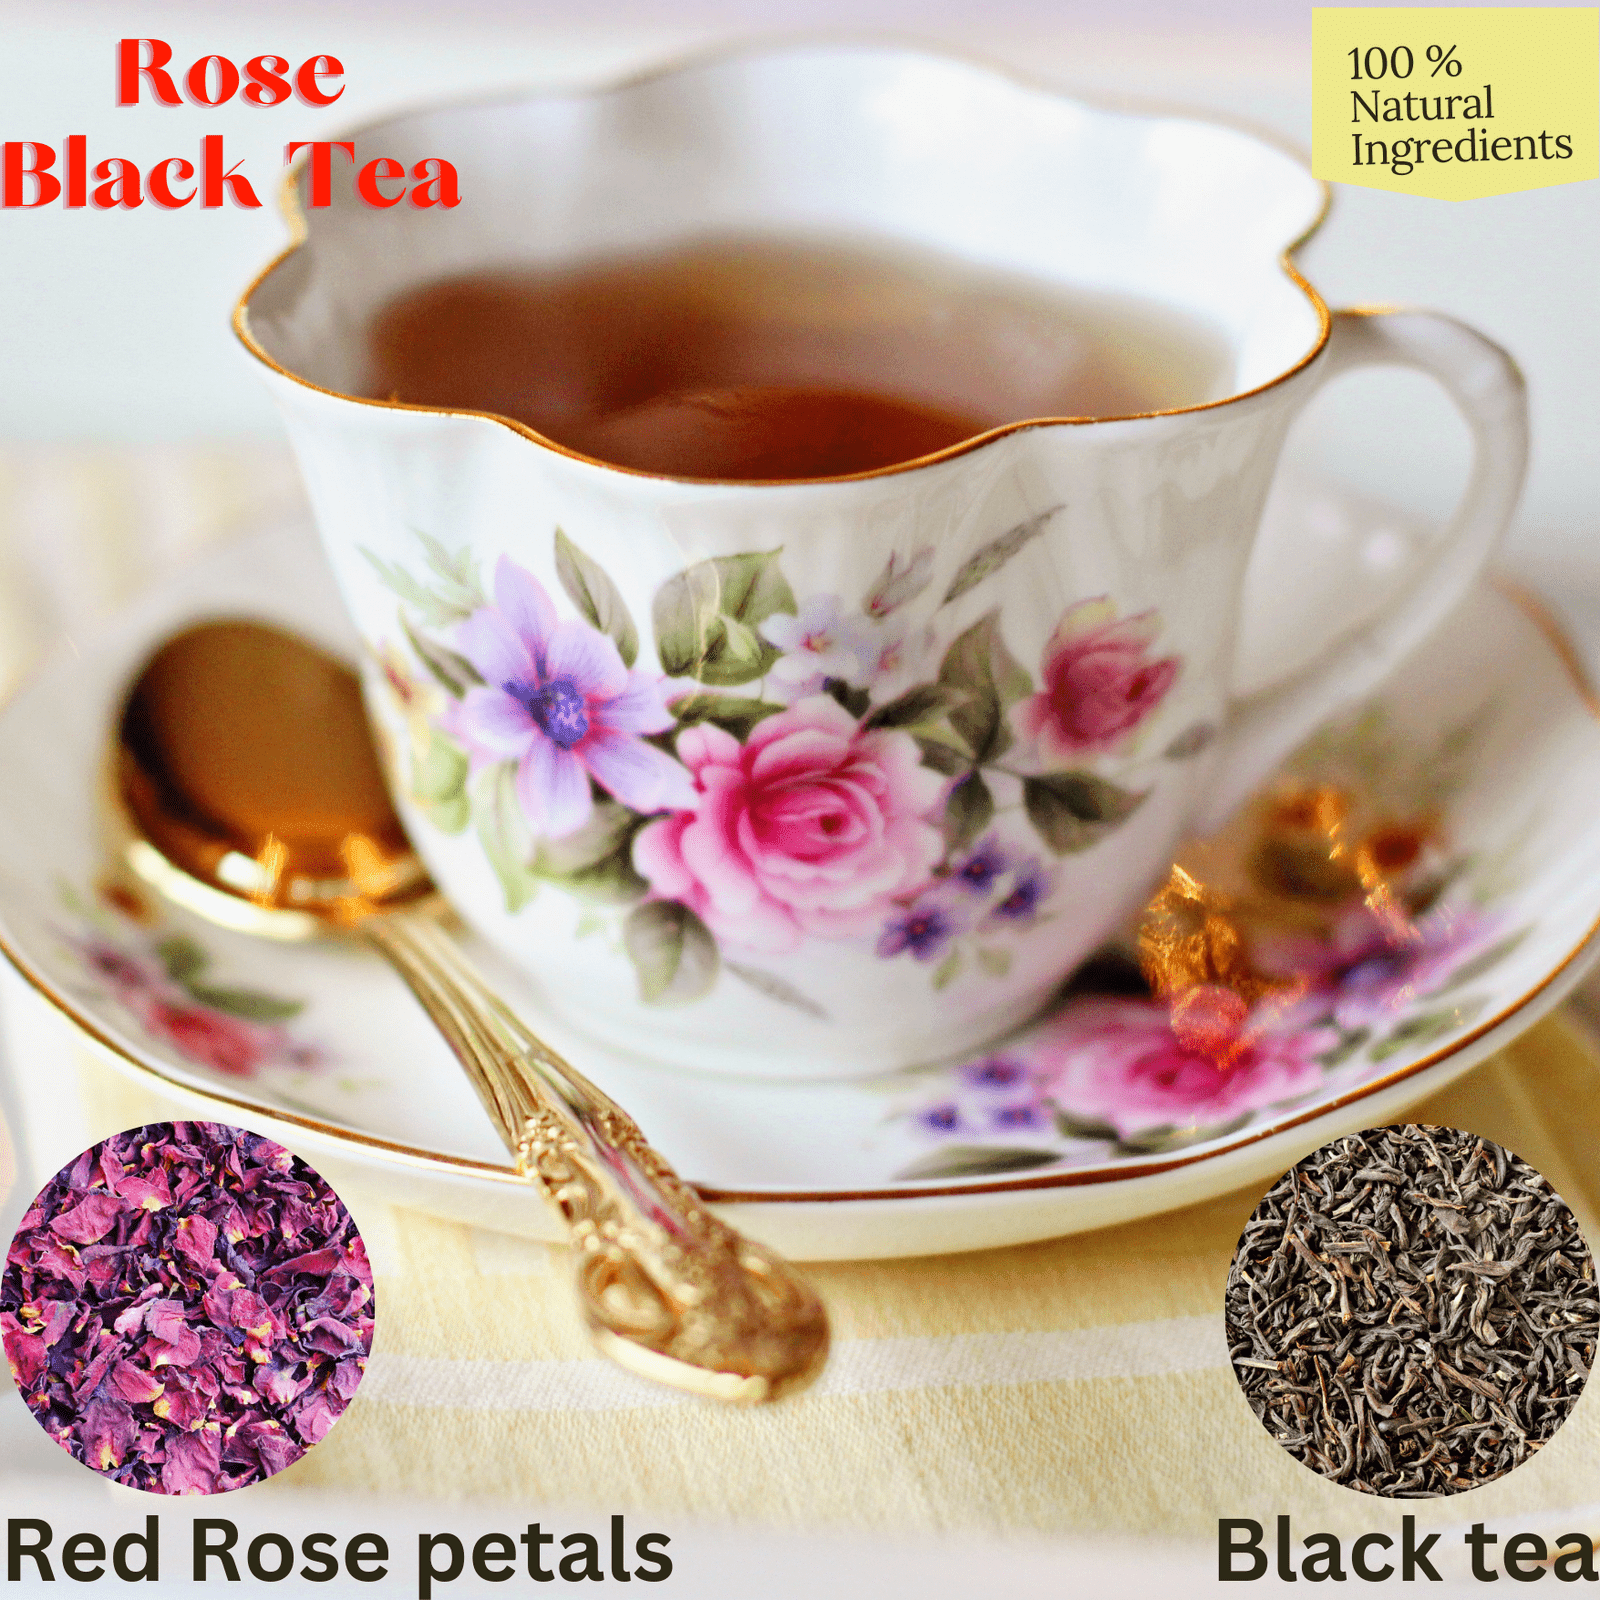 Rose Black Tea - ZYANNA® India - zyanna.com